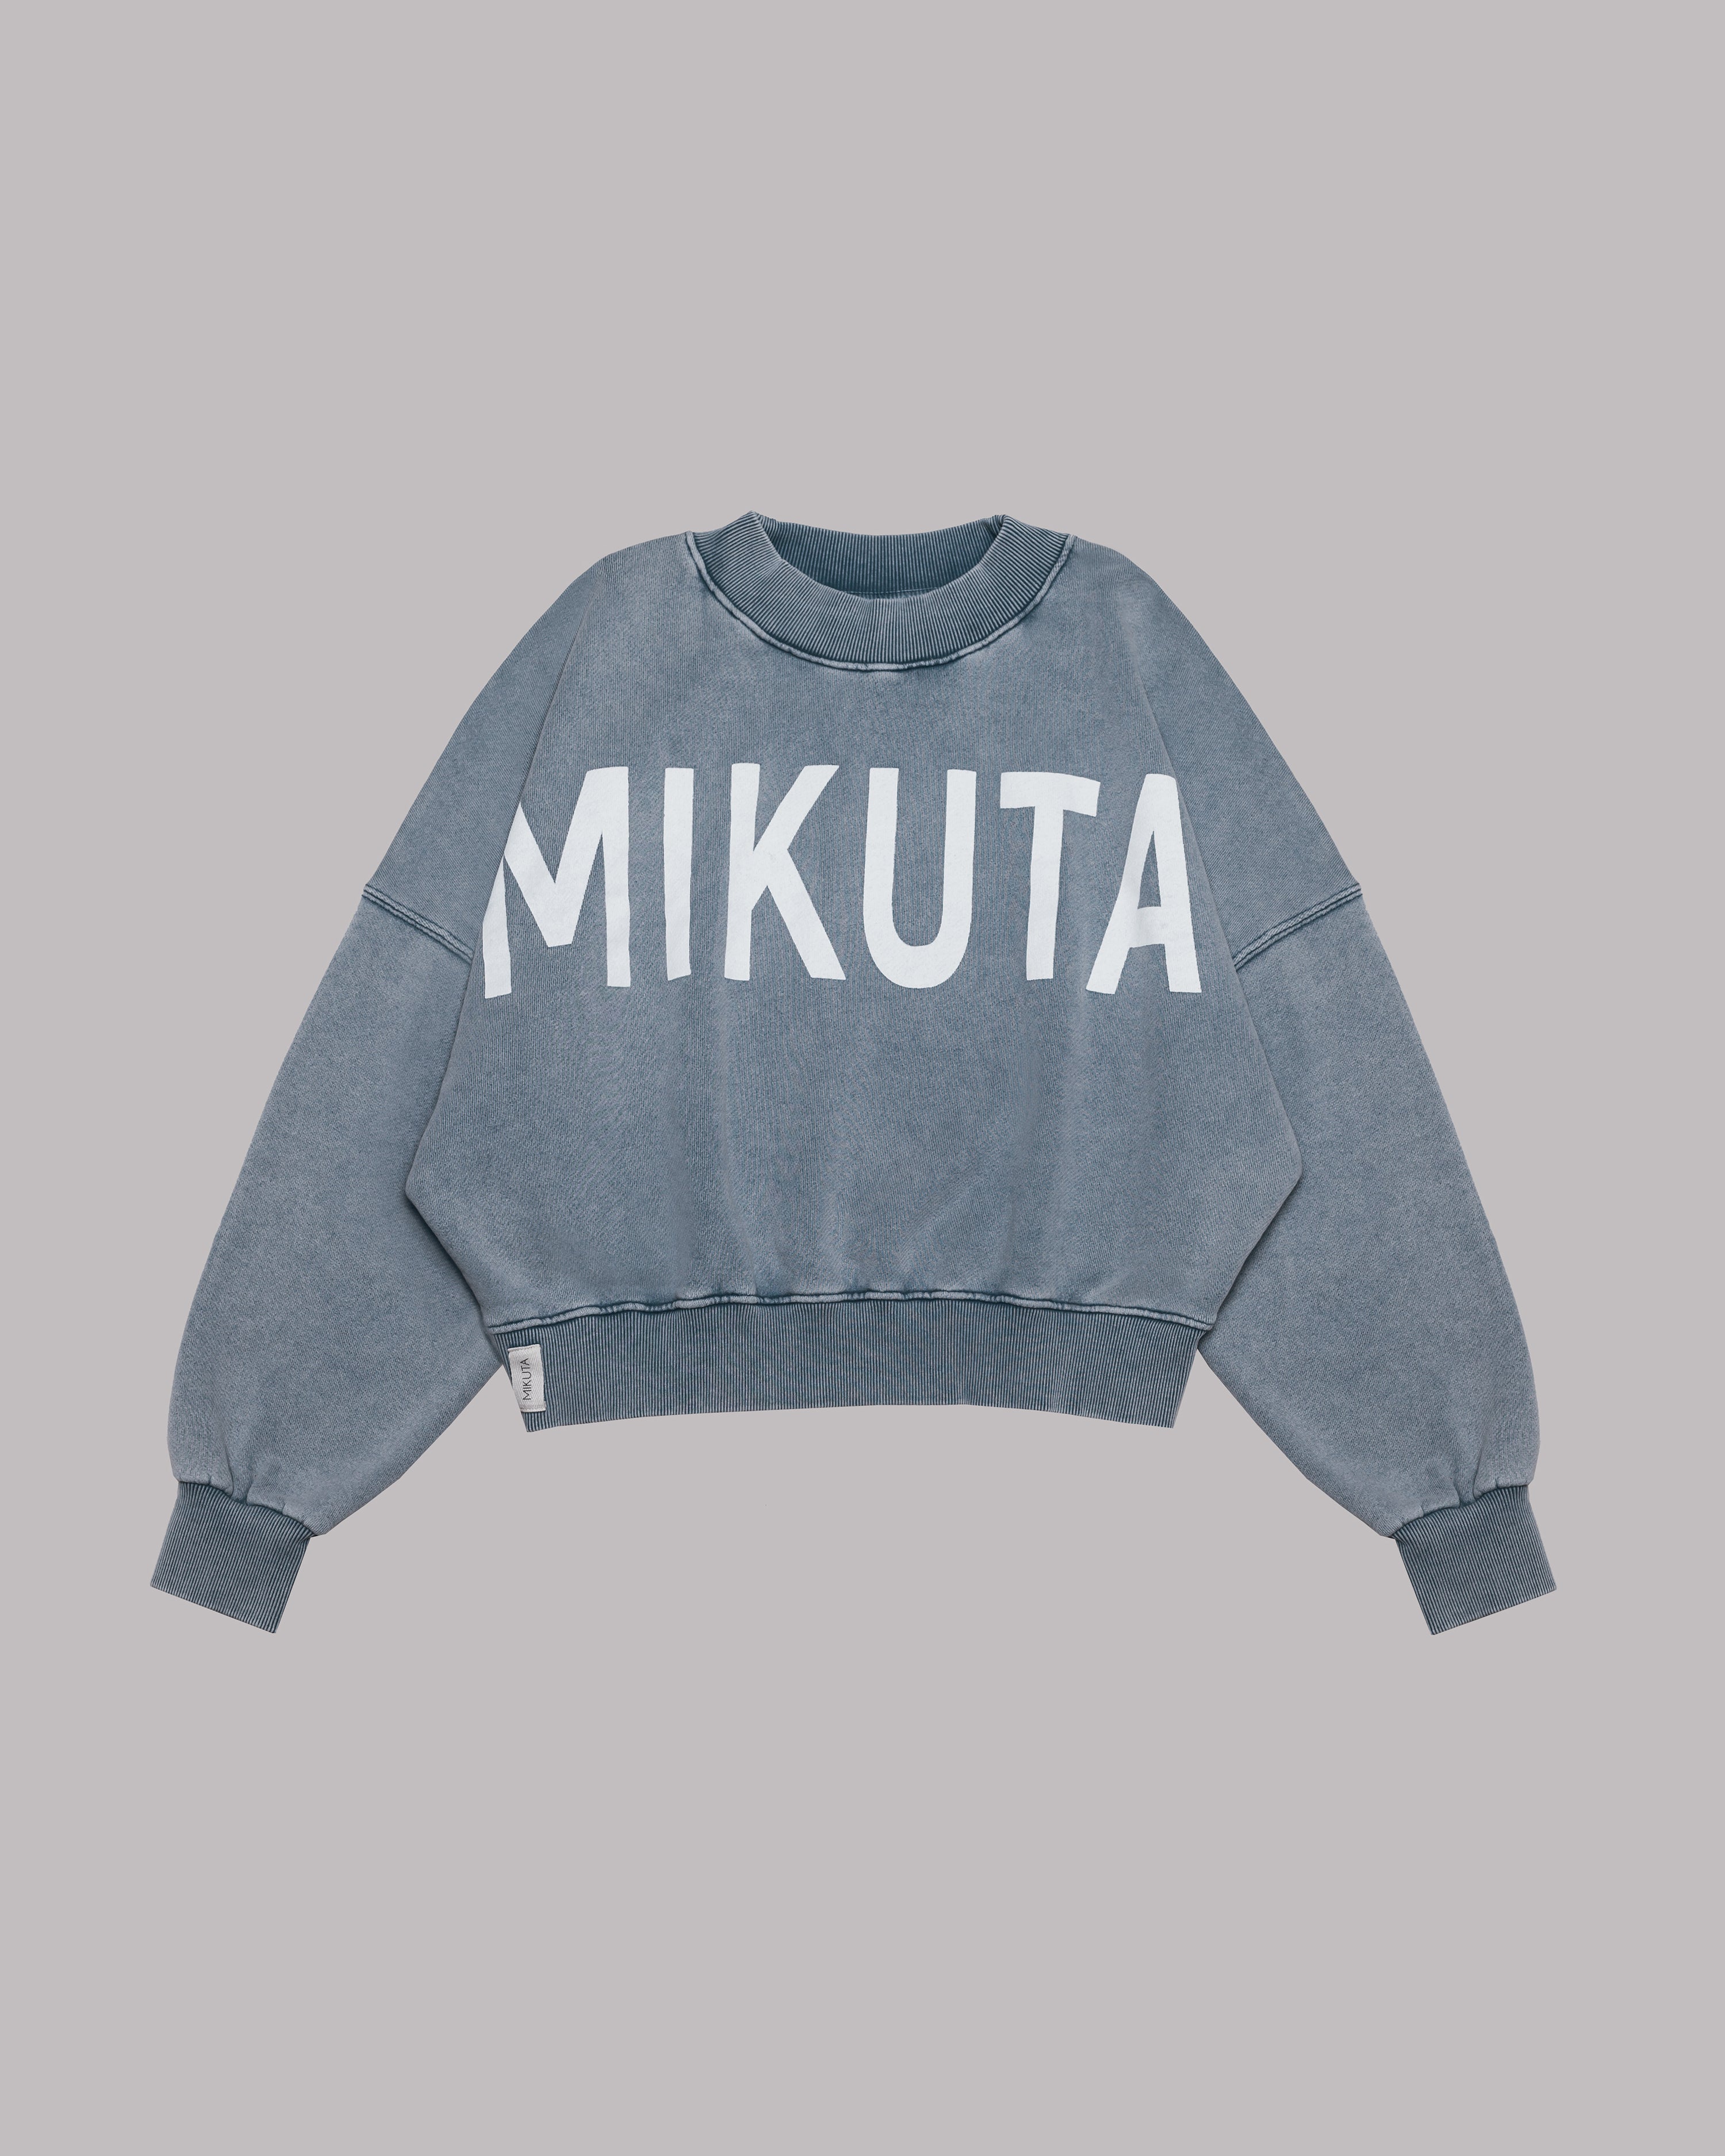 The Blue Faded Mikuta Sweater